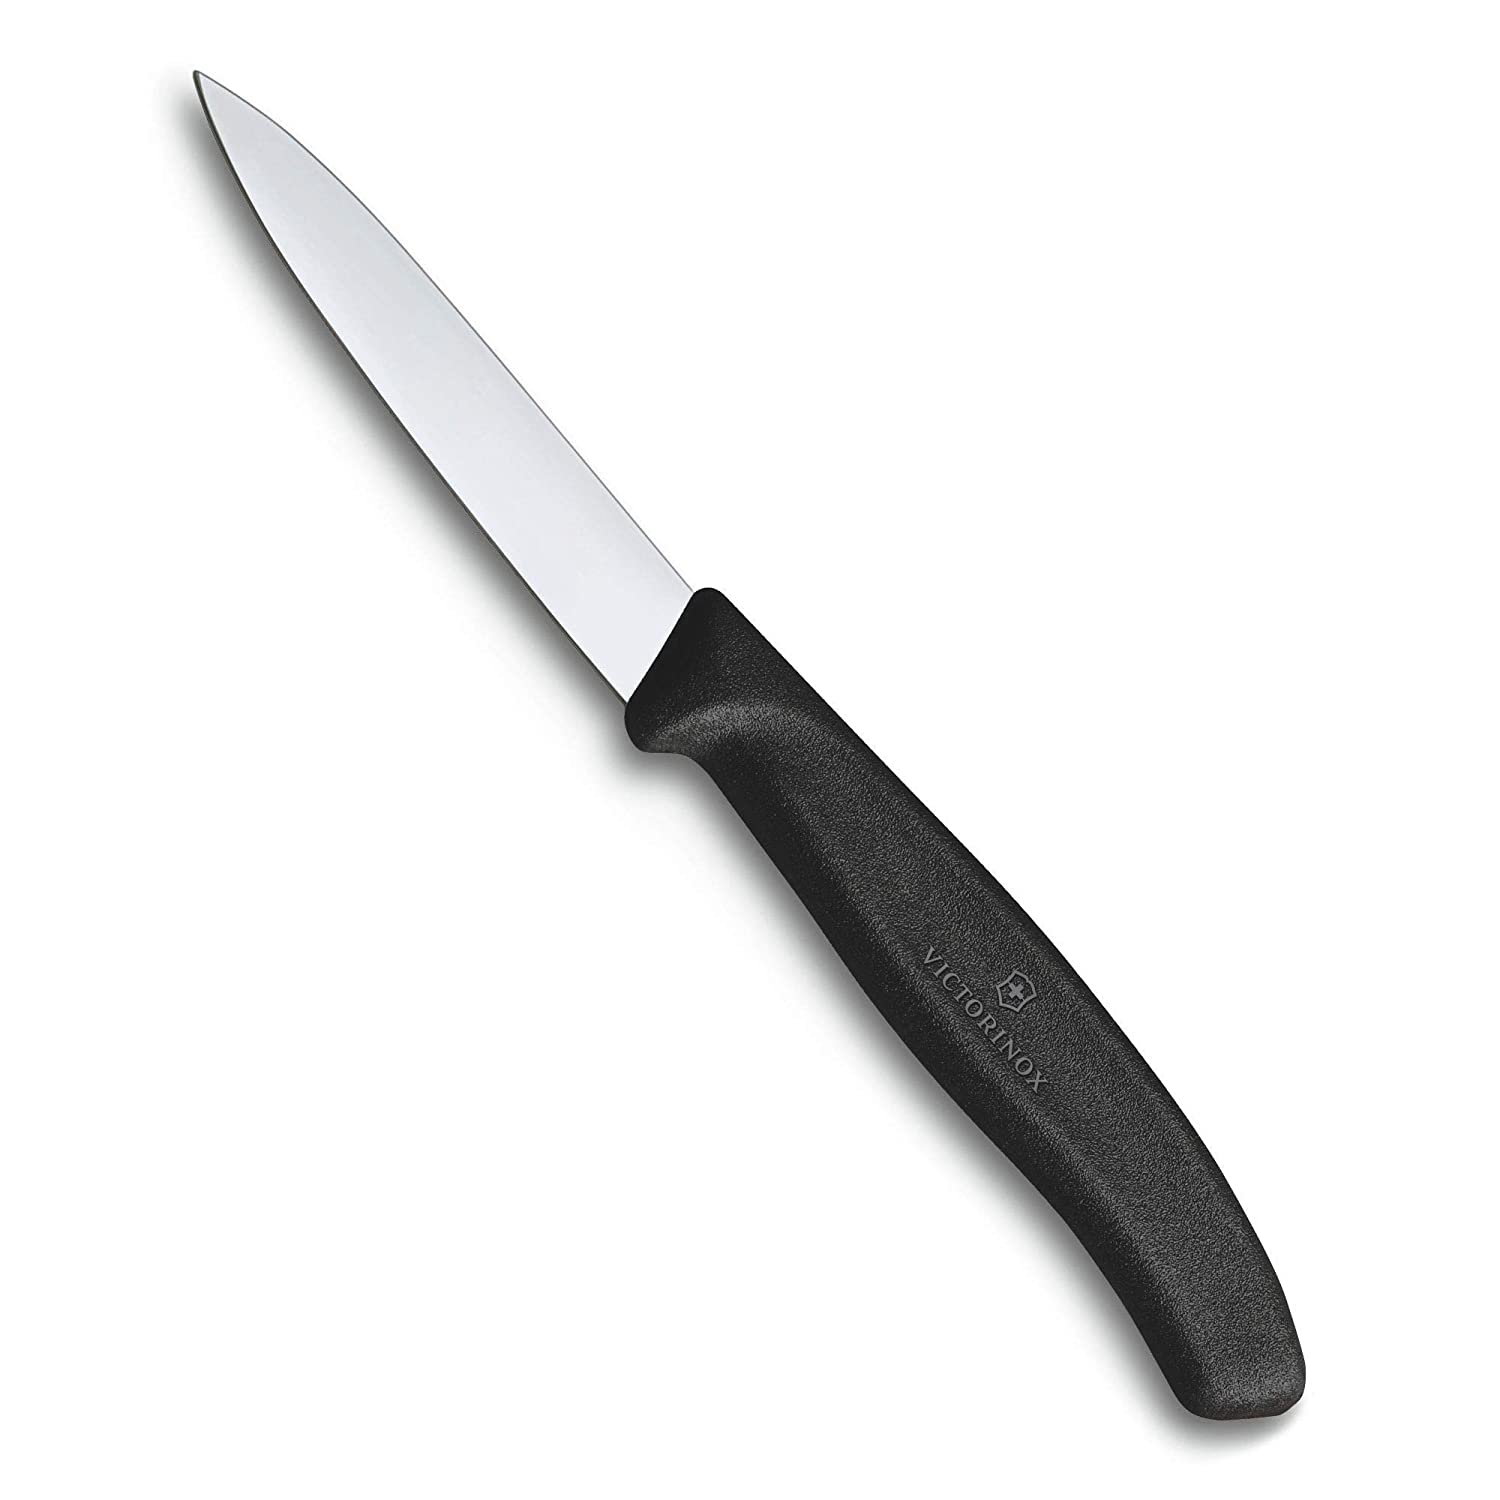 Victorinox kitchen knife for vegetables (8cm blade, non-slip handle, center point, stainless steel, dishwasher-safe) black